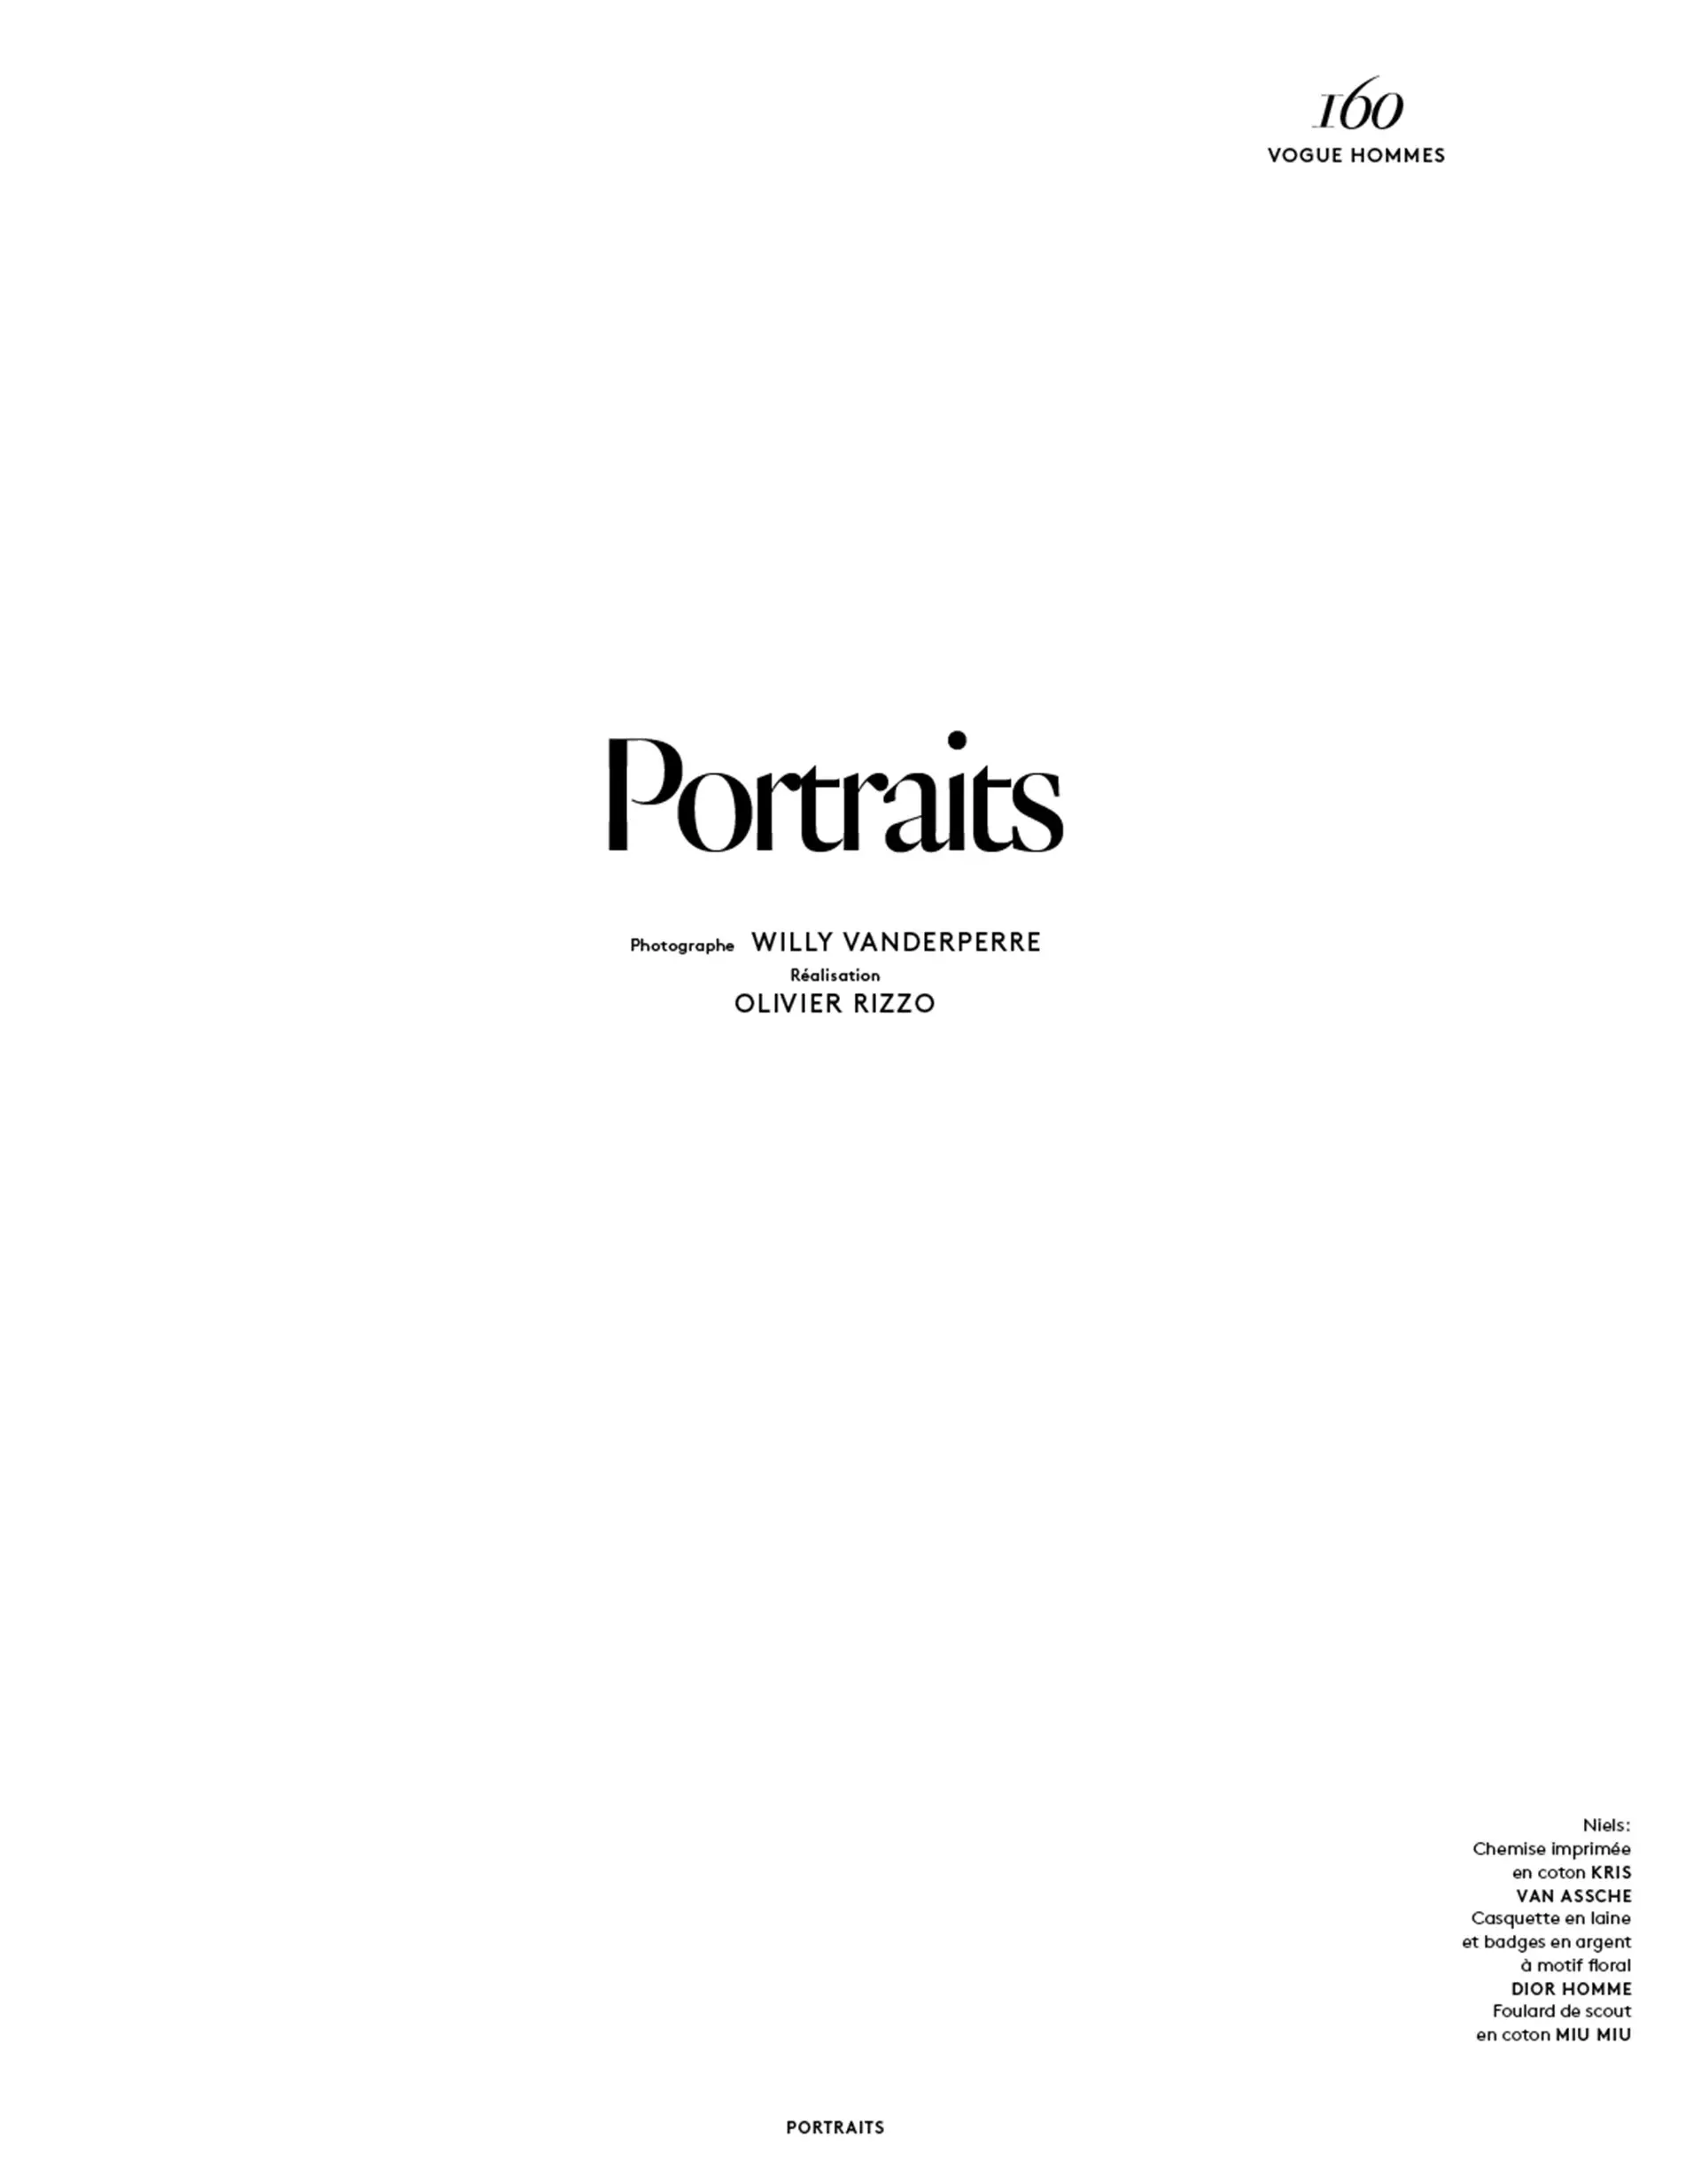 Vogue Hommes International L/Z 2015: Portretten